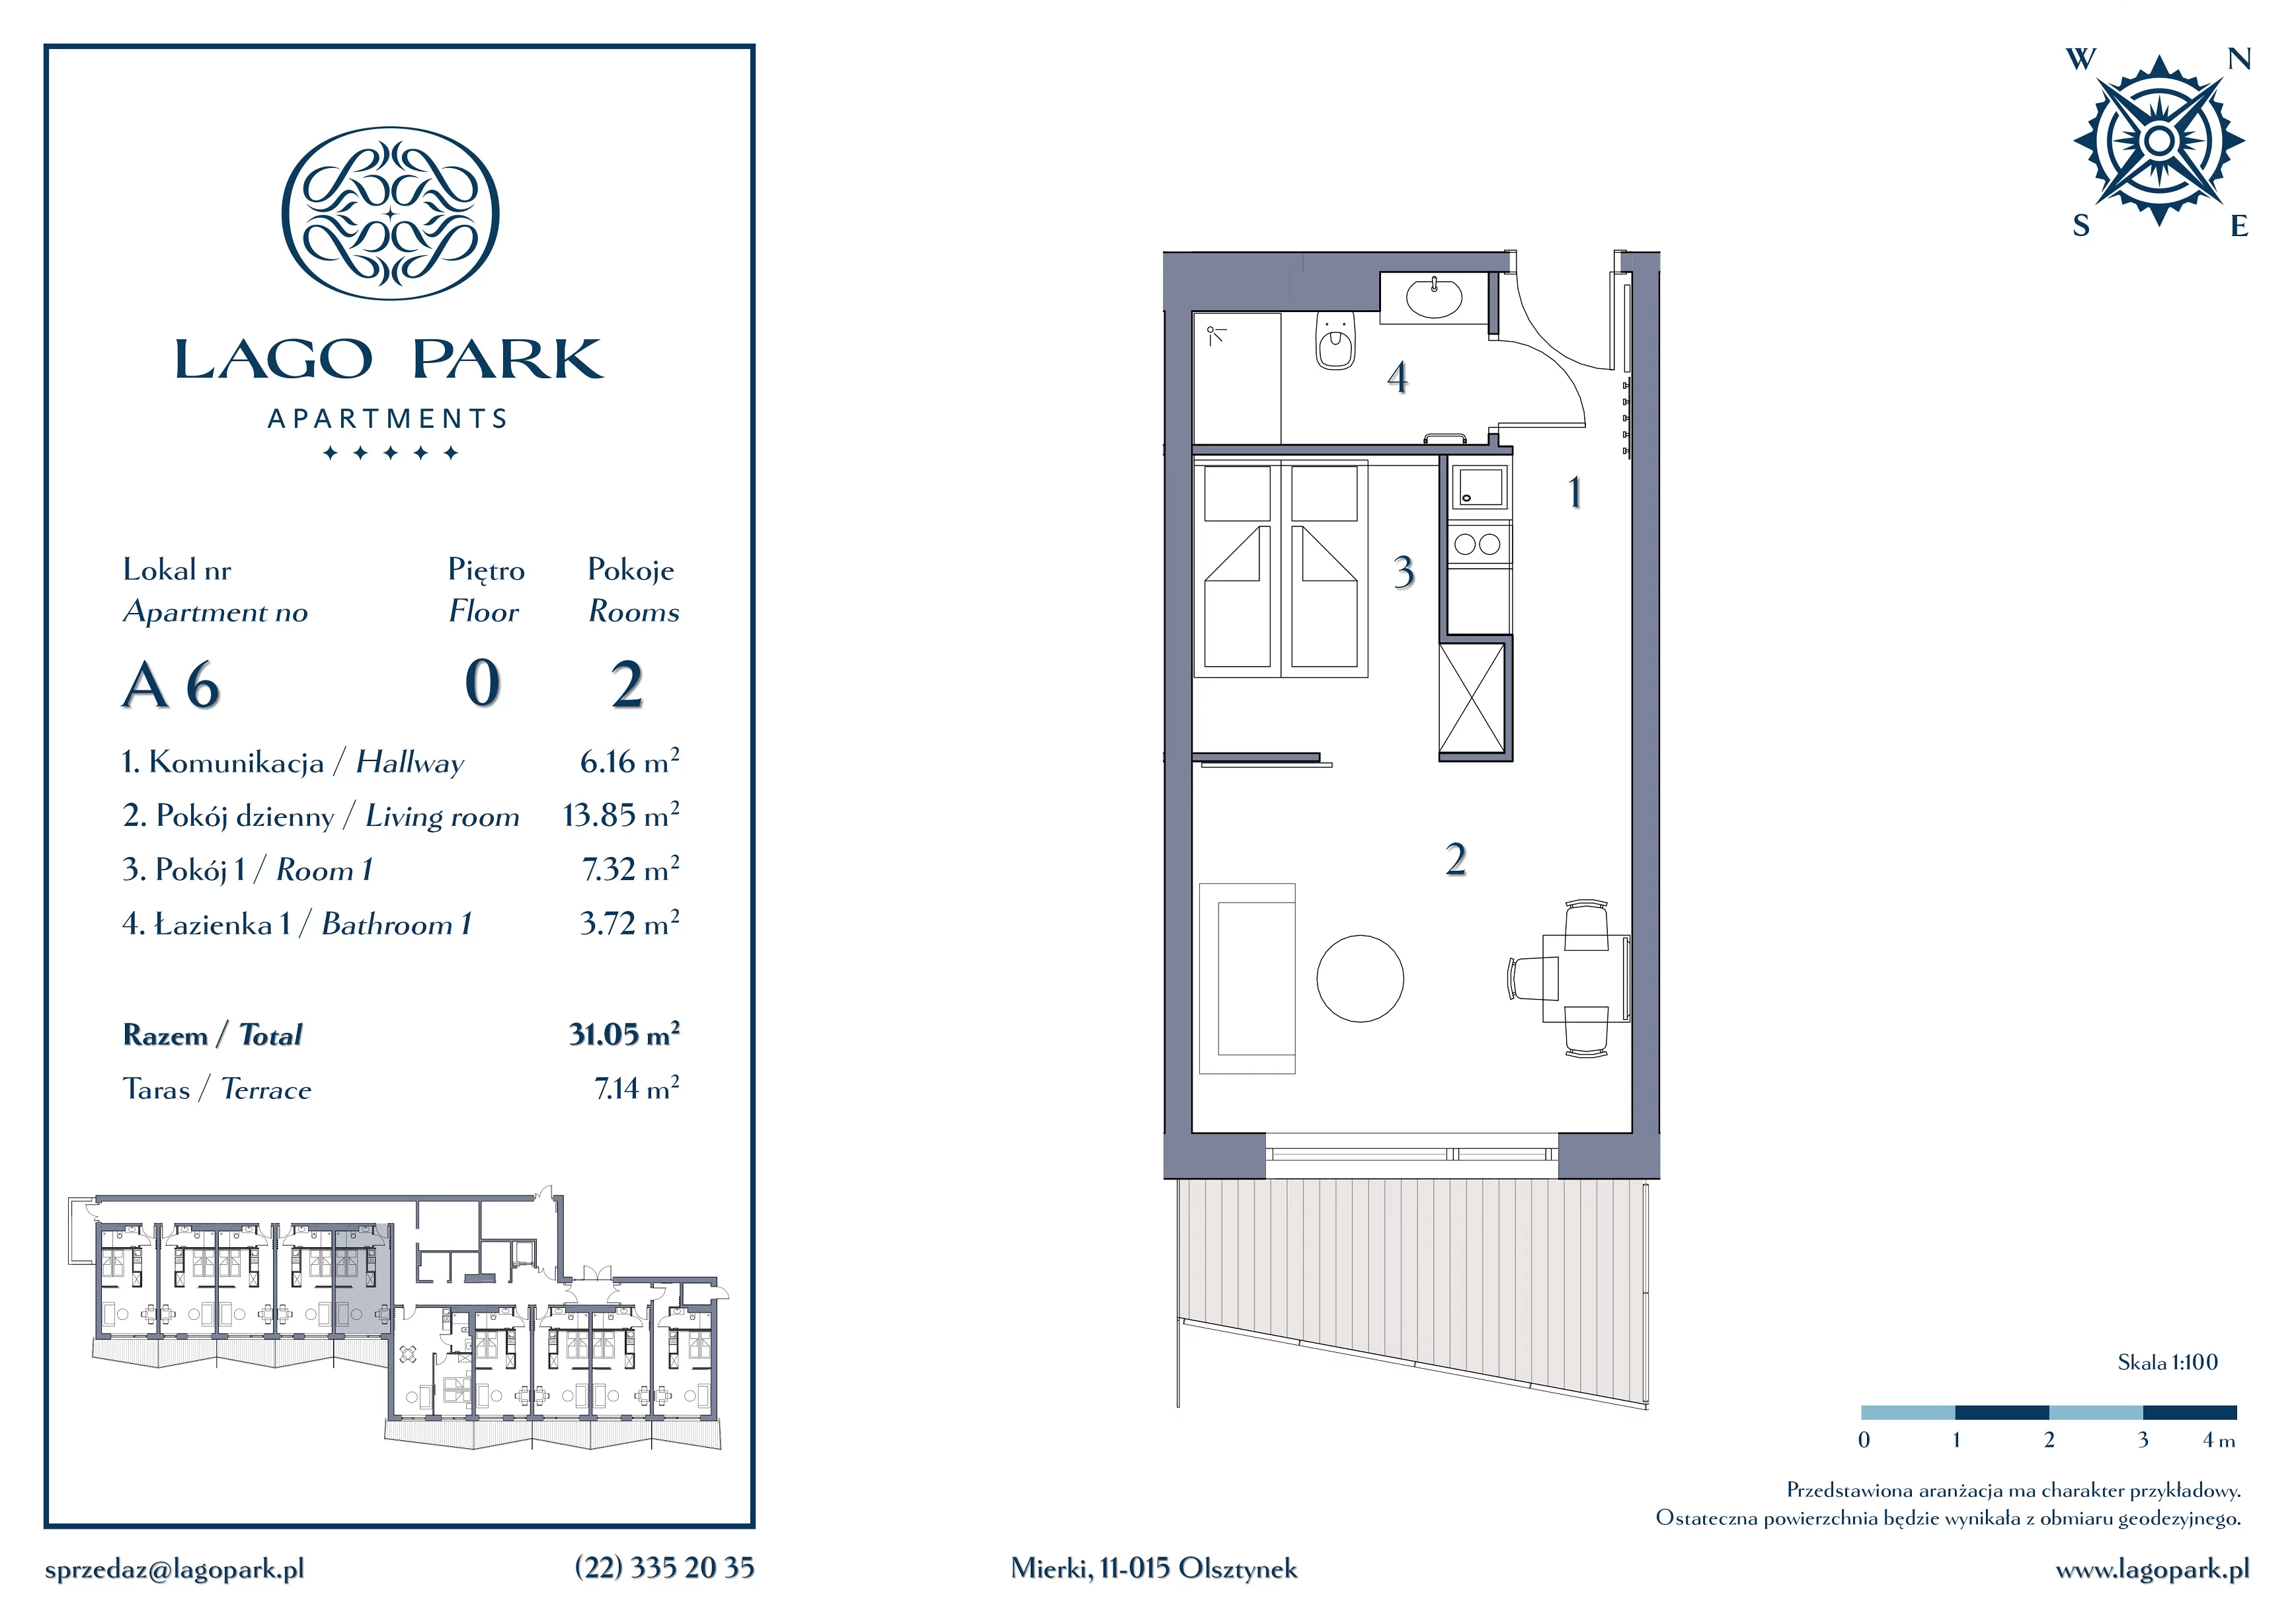 Apartament inwestycyjny 31,05 m², parter, oferta nr A6, Lago Park Apartments by Aries, Mierki, Kołatek 2